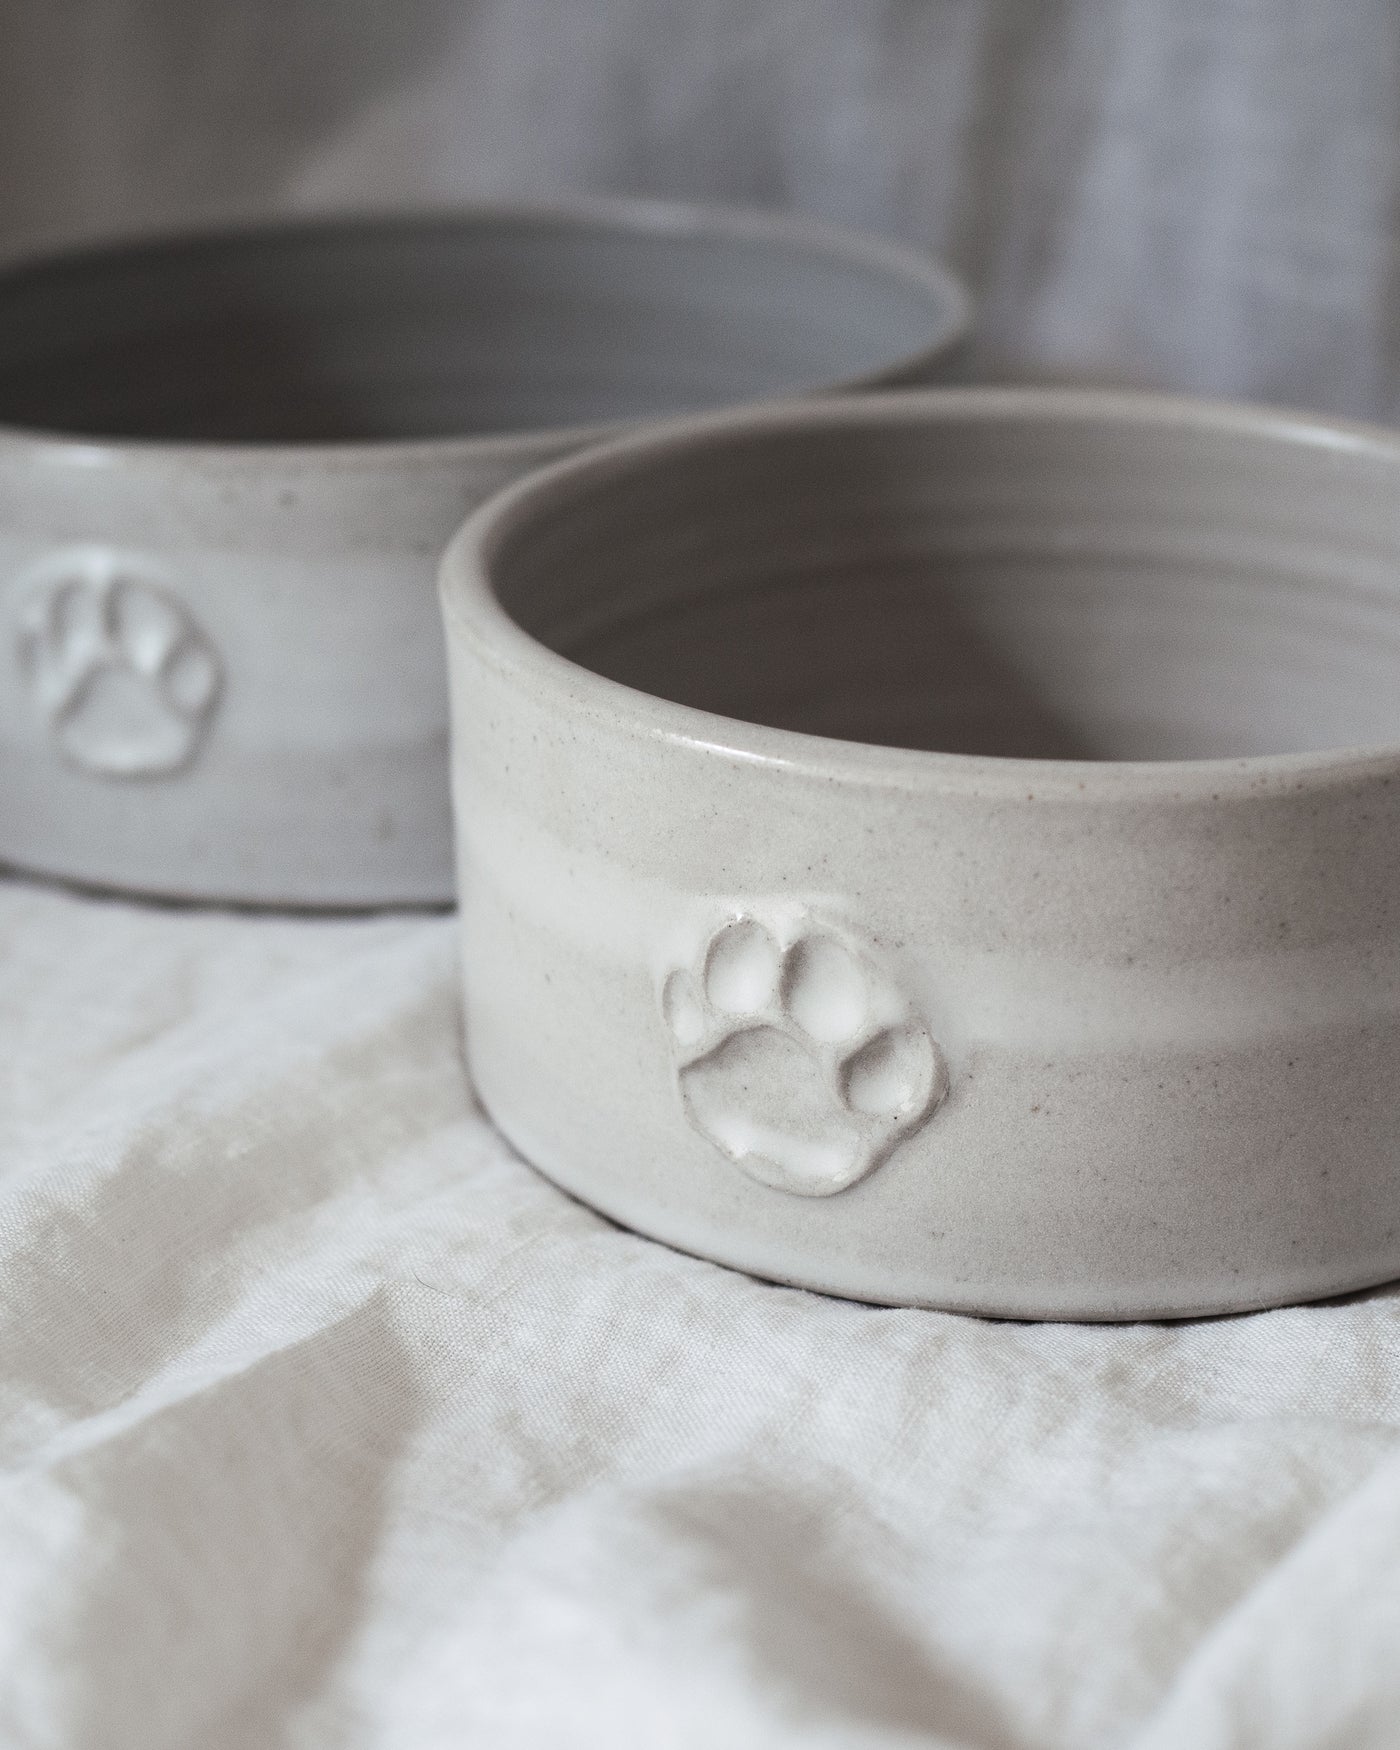 Handmade Pottery Bowls in Soft Chalk Glaze